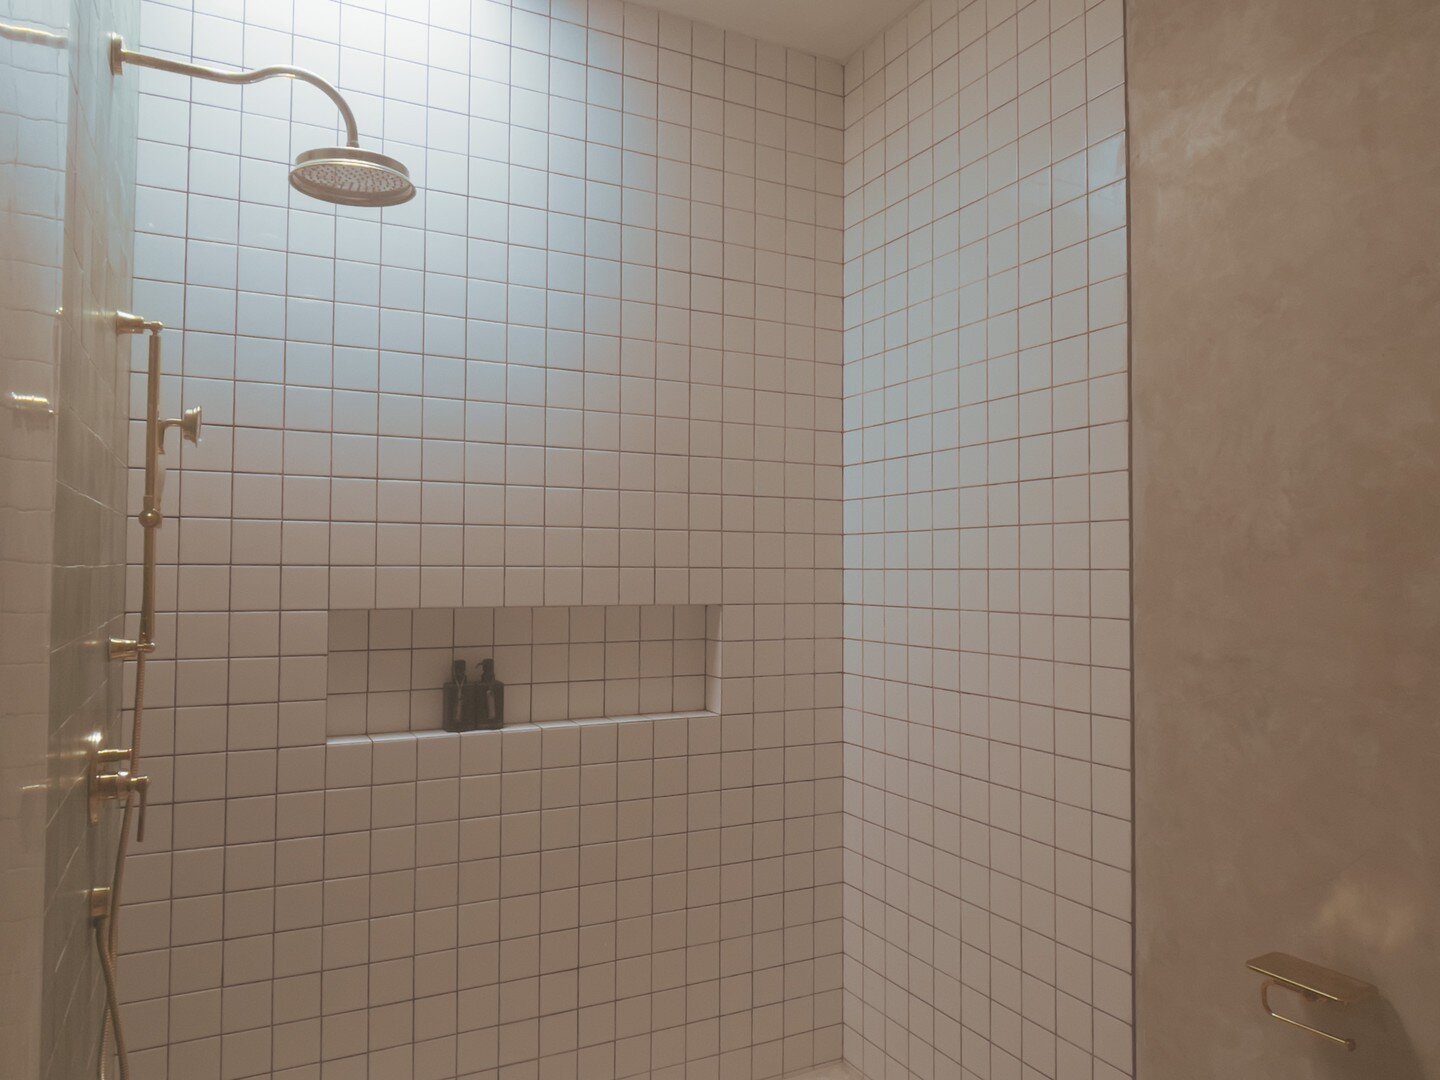 Shower details💫

*
*
*
 #norushvillas #bathroom #vogueliving #interiordesign